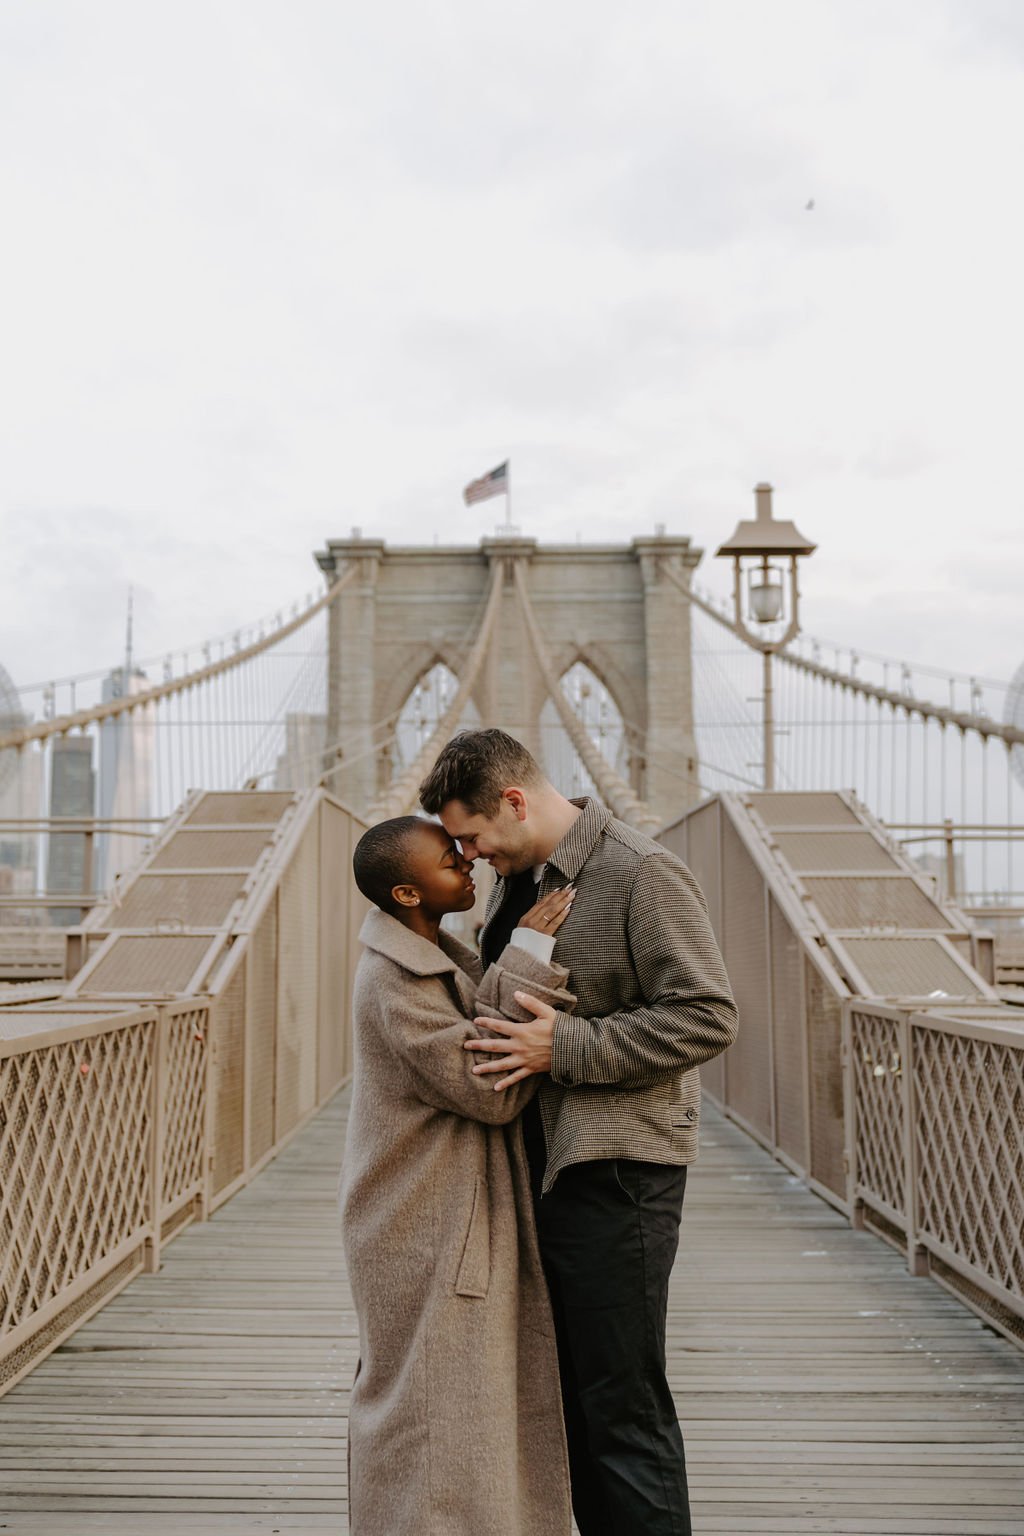 Steph-Powell-Creative-Brooklyn-Bridge-Couples-Session-37.jpg